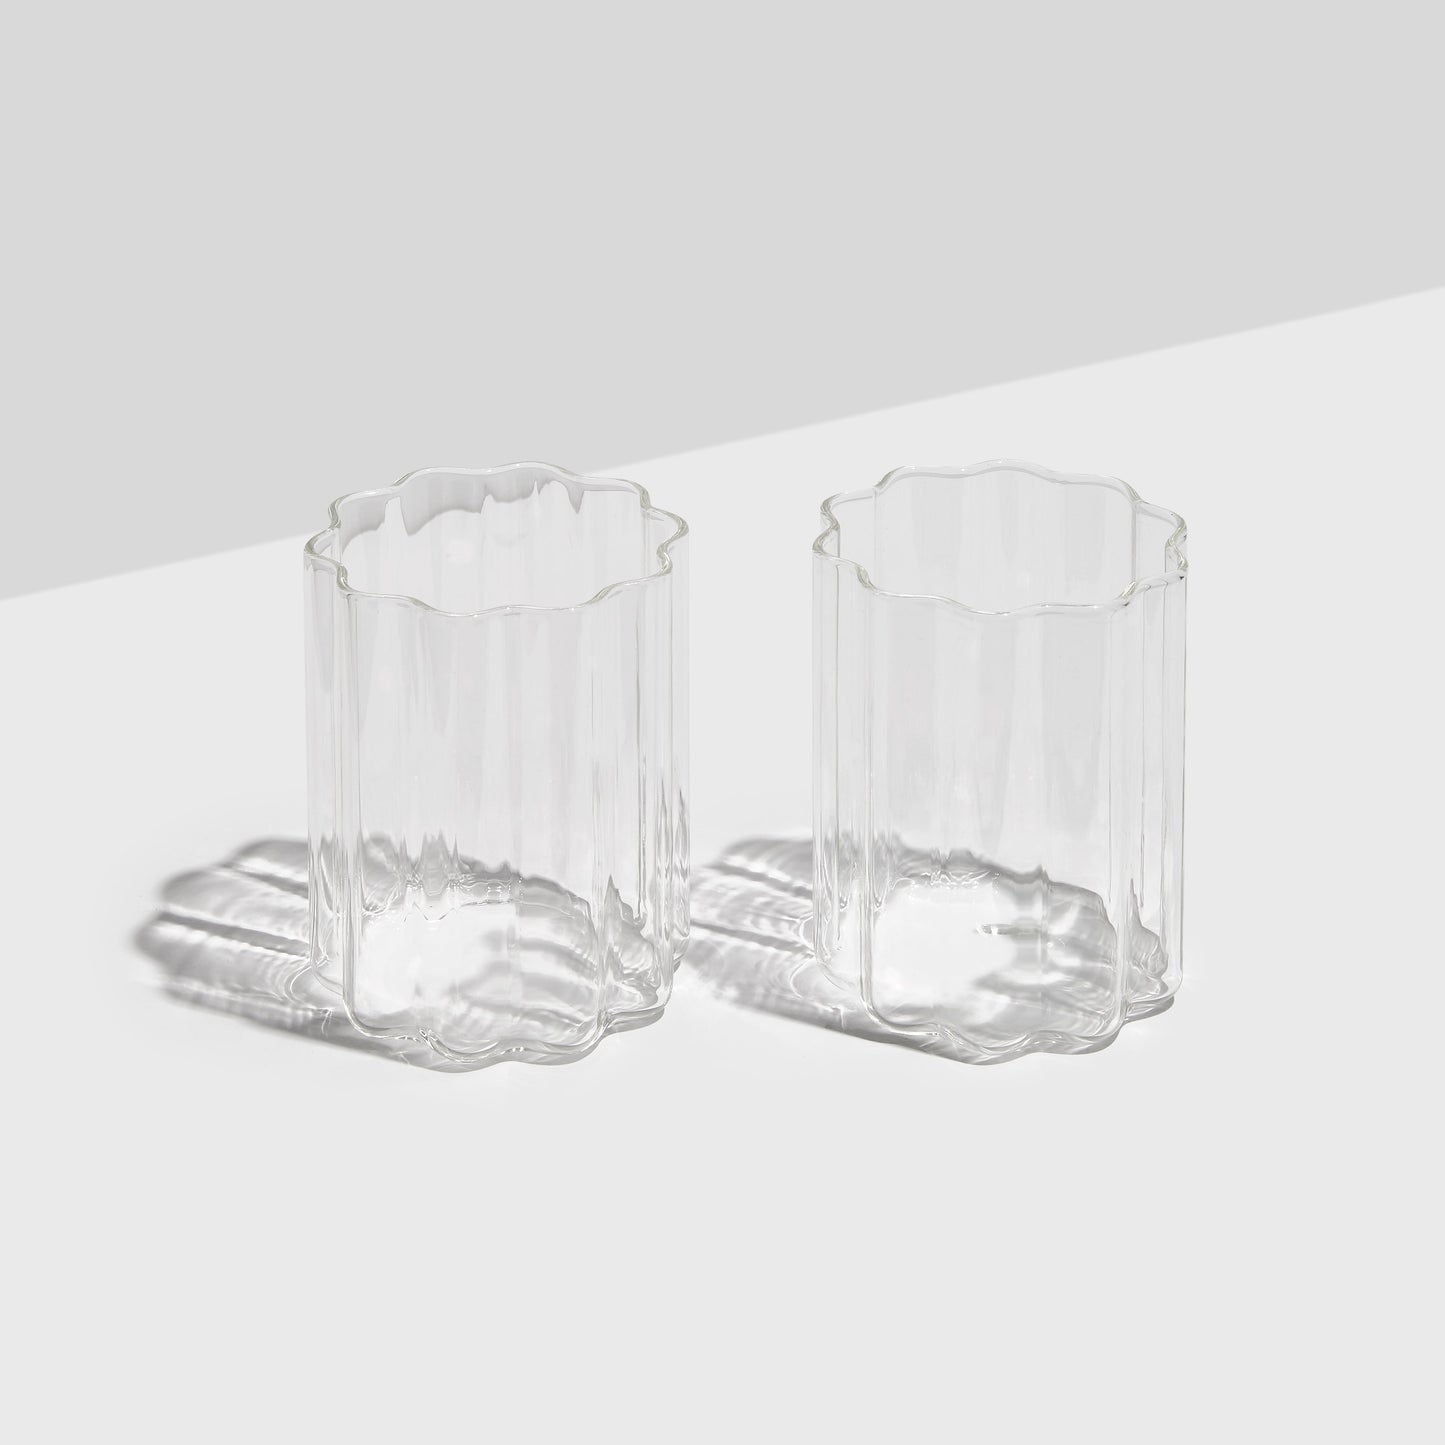 TWO x WAVE GLASSES - CLEAR - Fazeek Drinkware Glasses